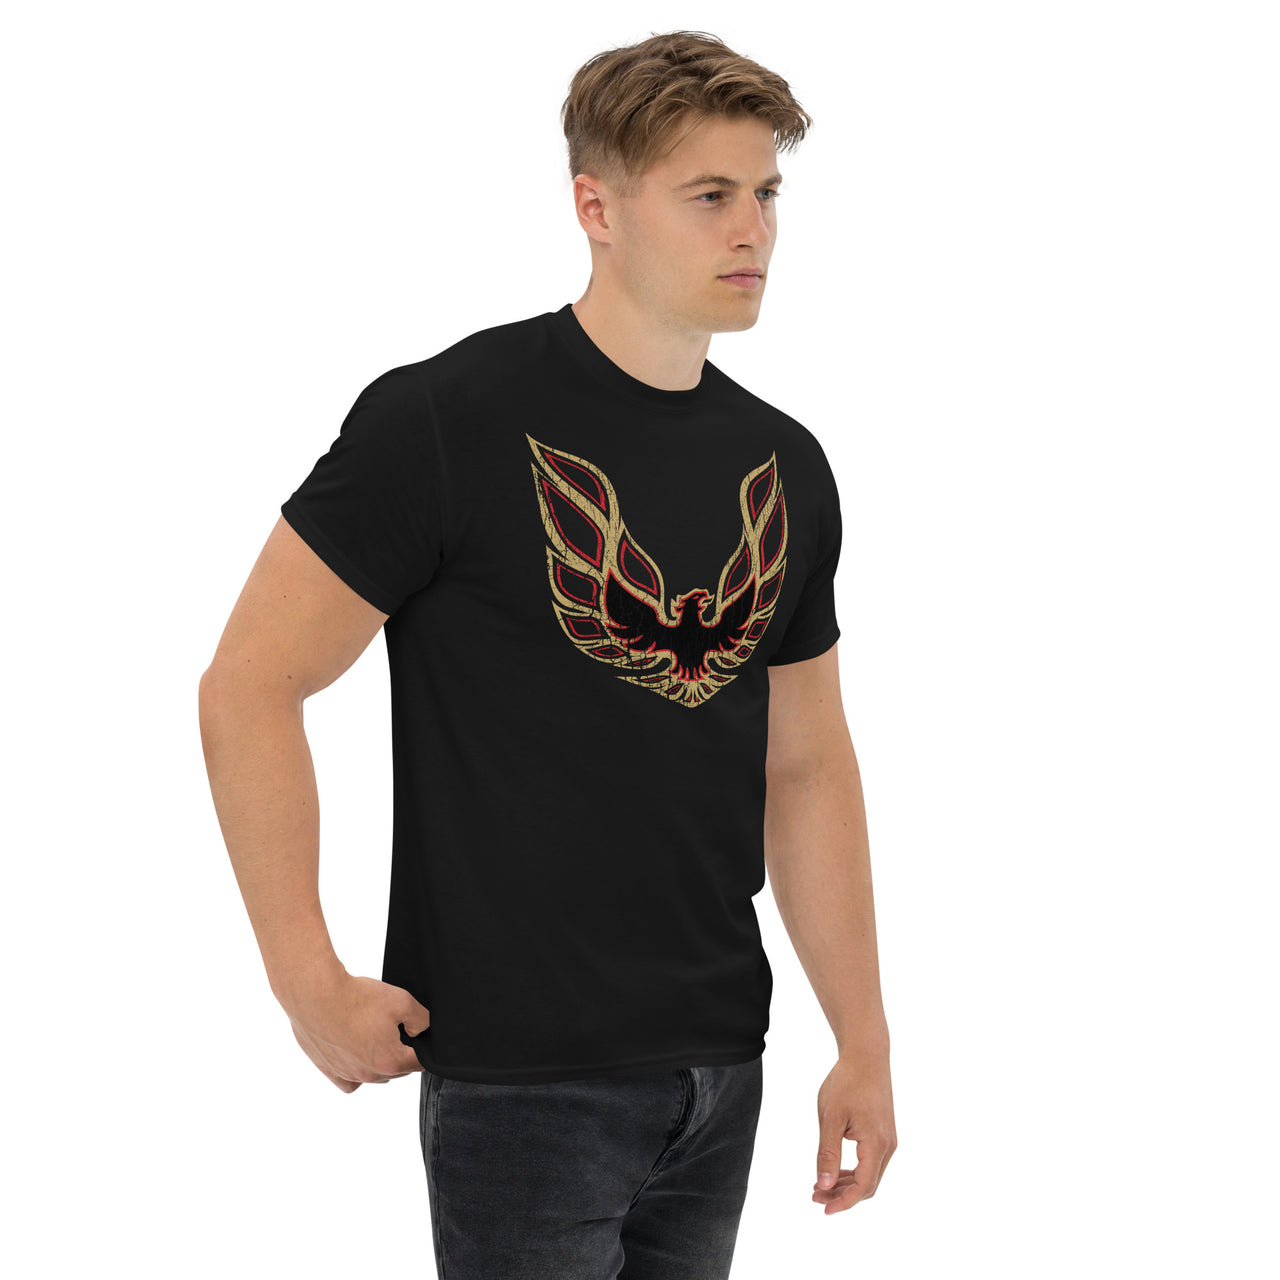 Traditional Trans Am Firebird Logo T-Shirt modeled in black